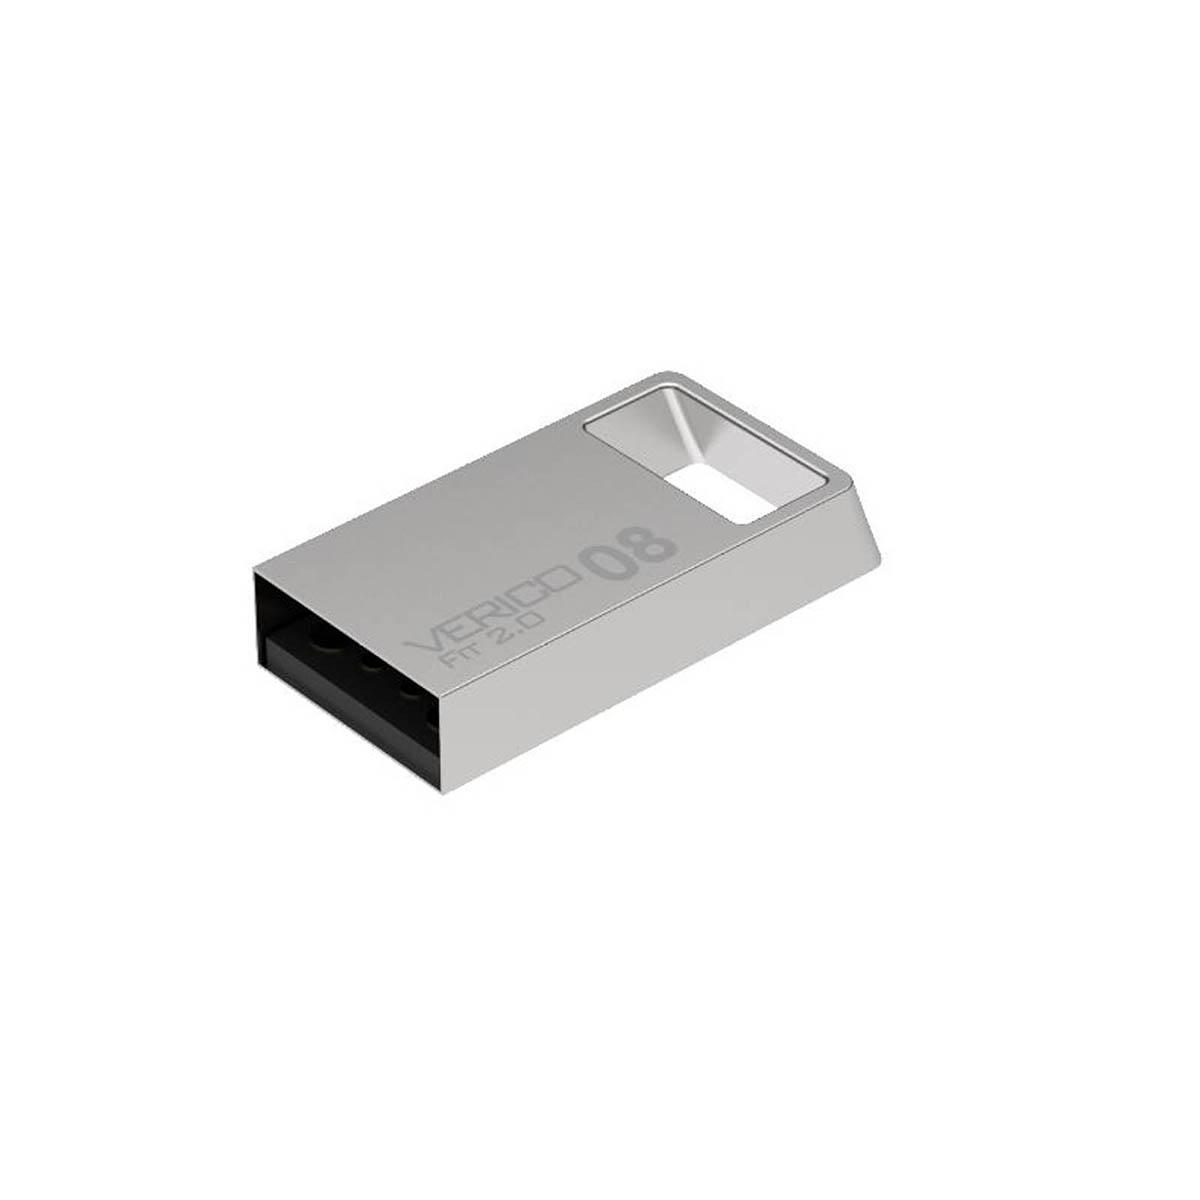 MEMORIA USB VERICO (1UDOV-RLSR83-NN) 8GB FIT VR23, SILVER - 1UDOV-RLSR83-NN